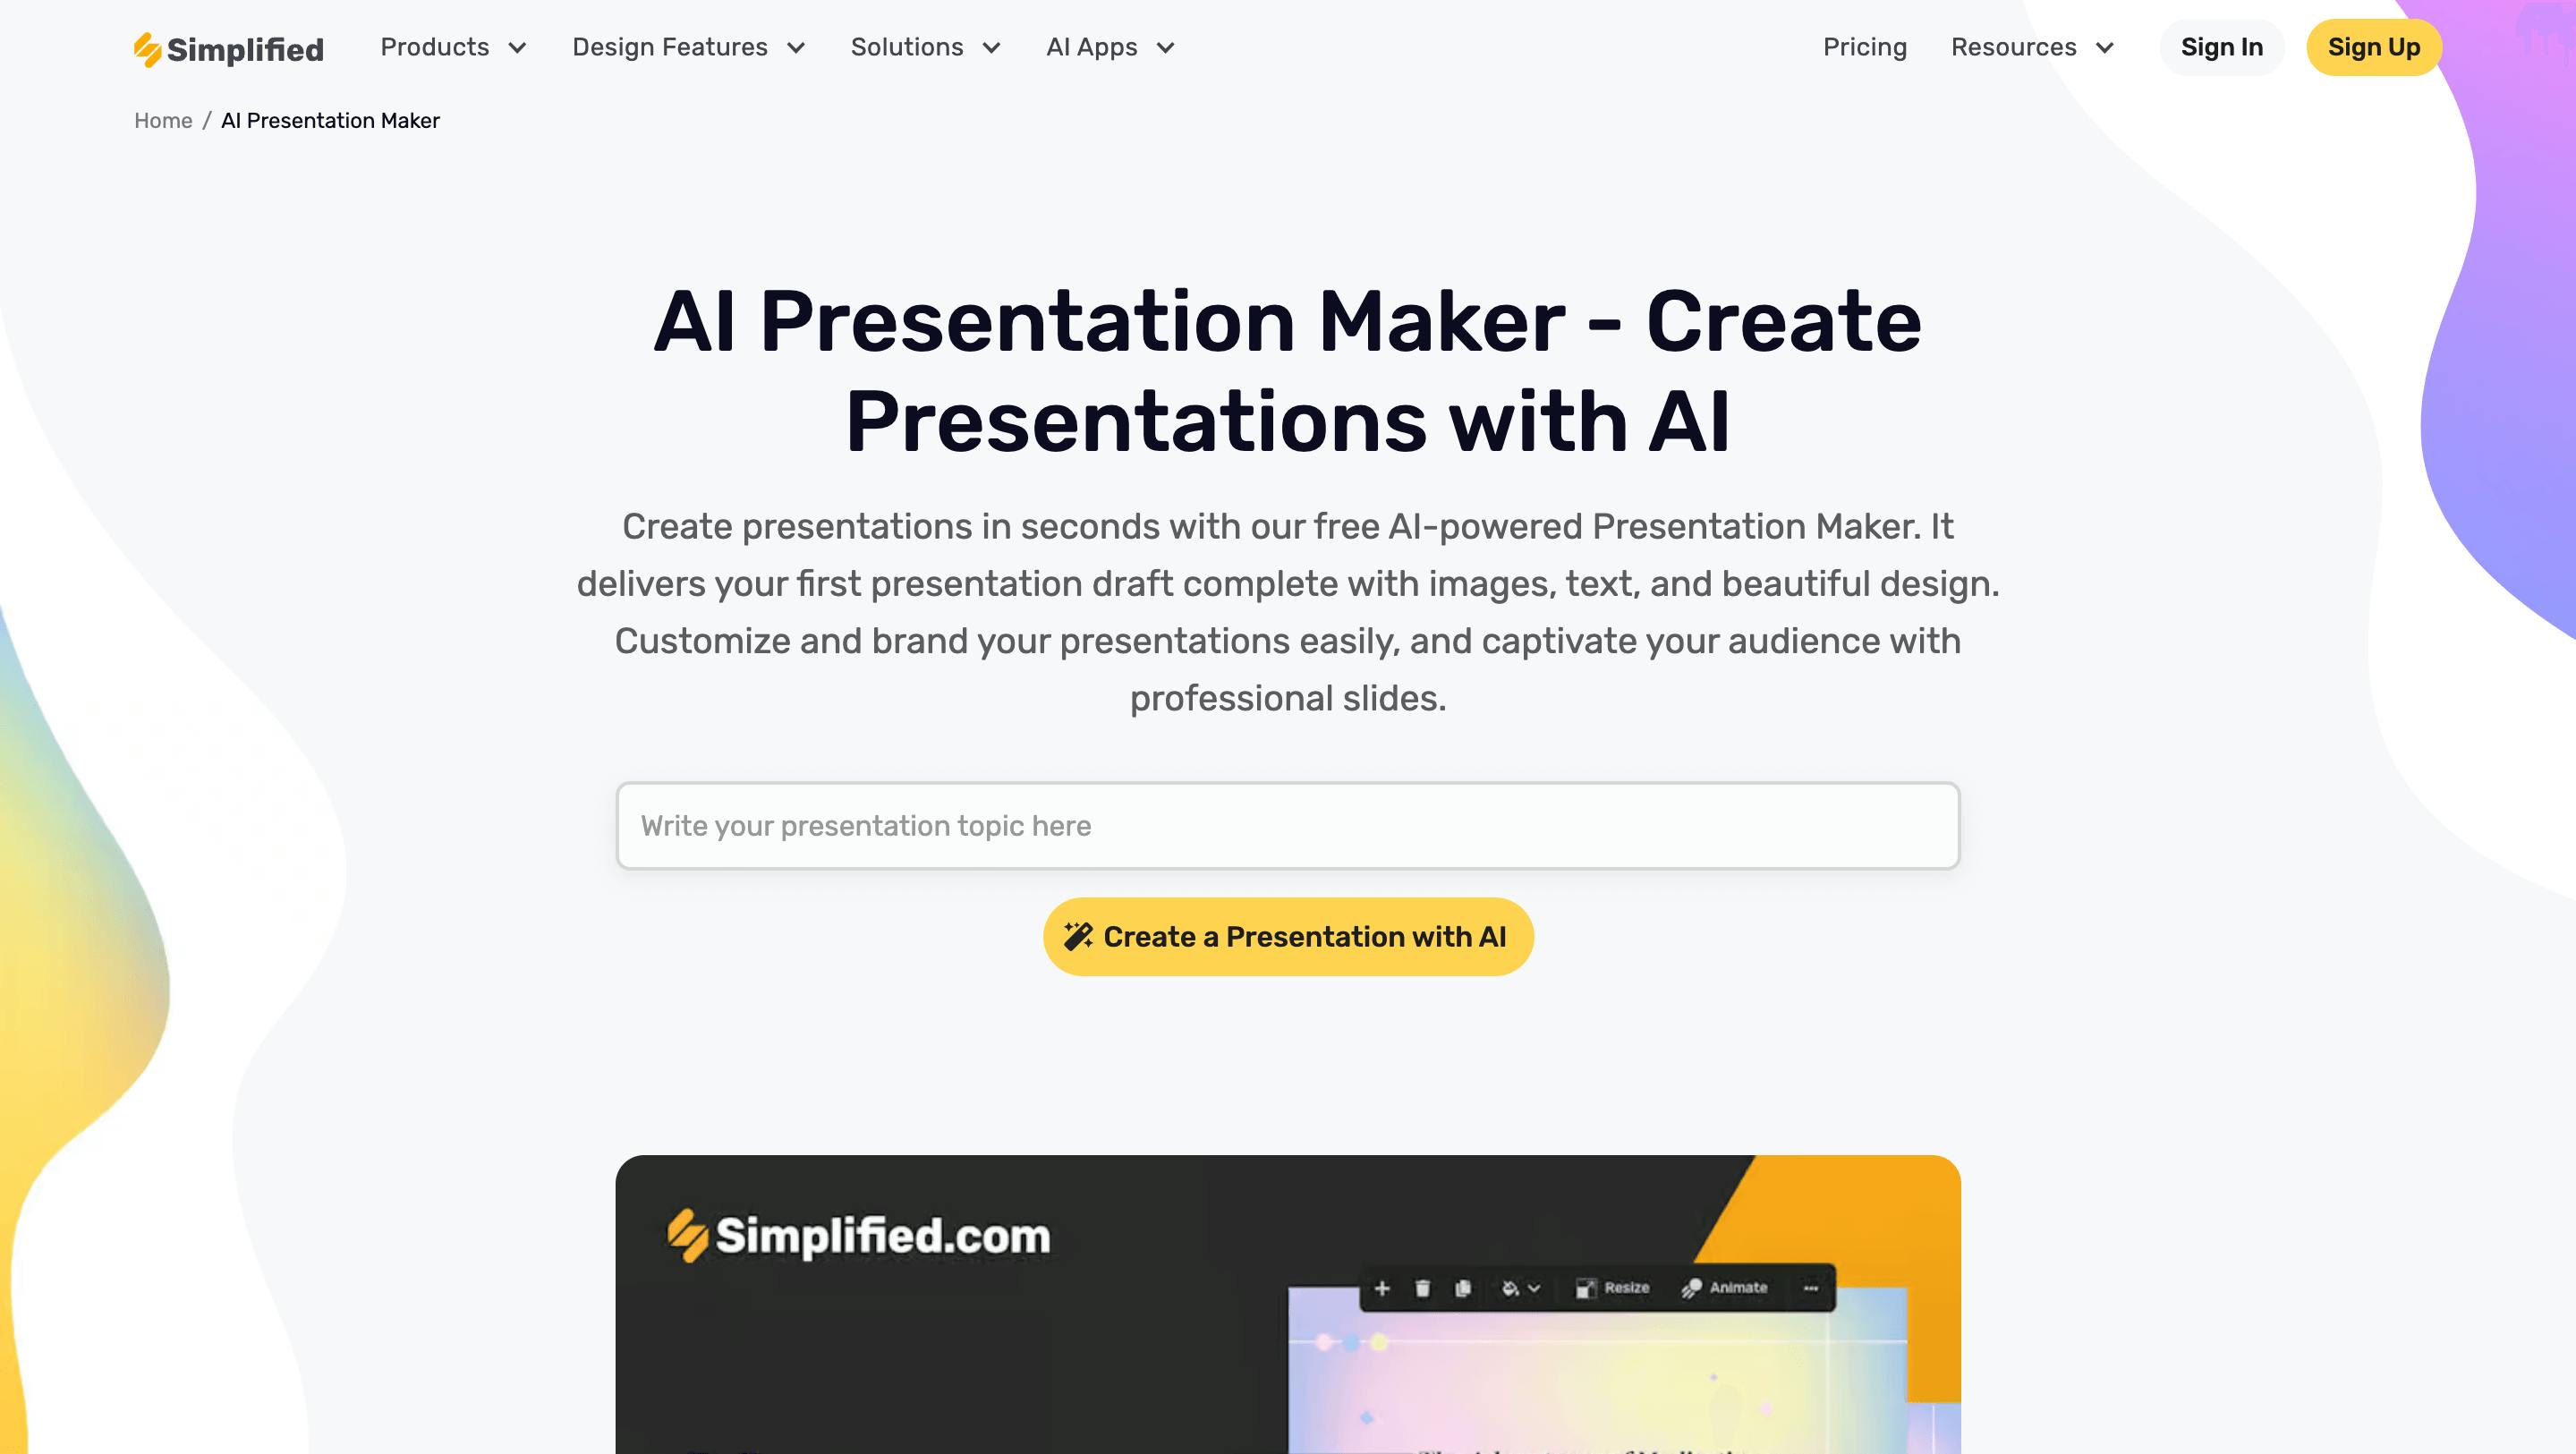 Simplified AI Presentation Maker